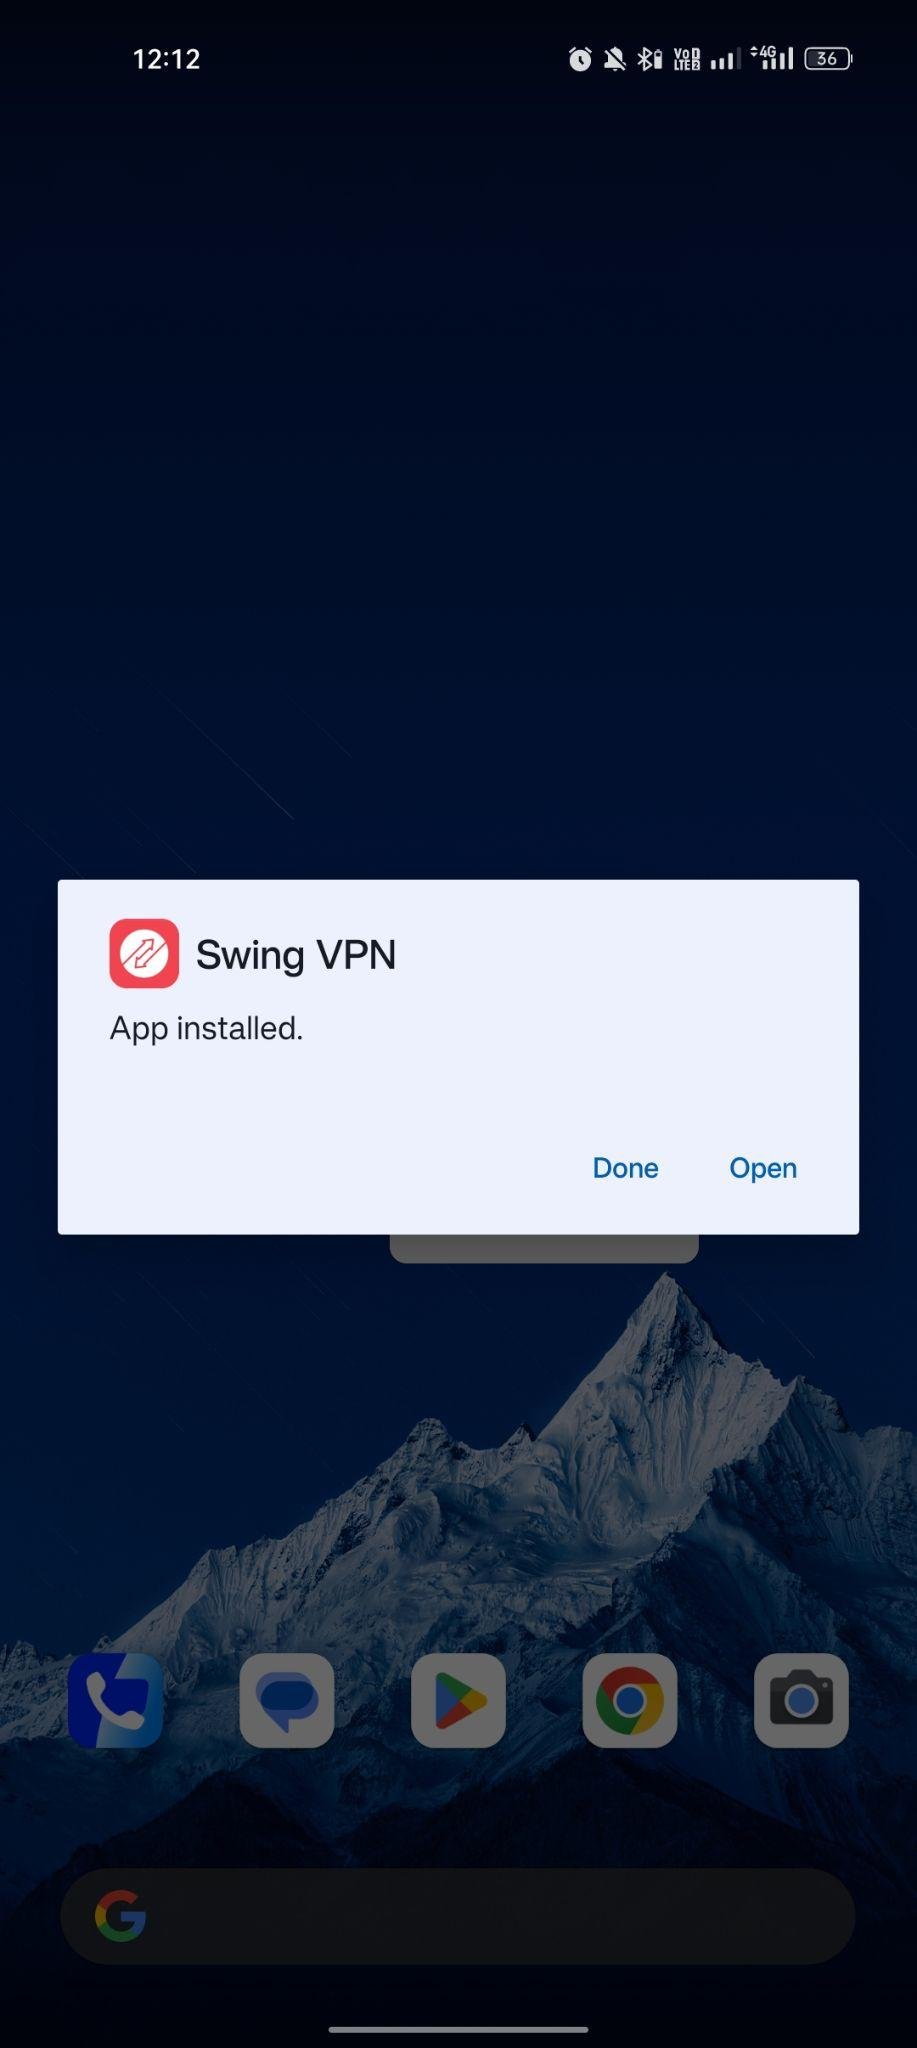 Swing VPN apk installed